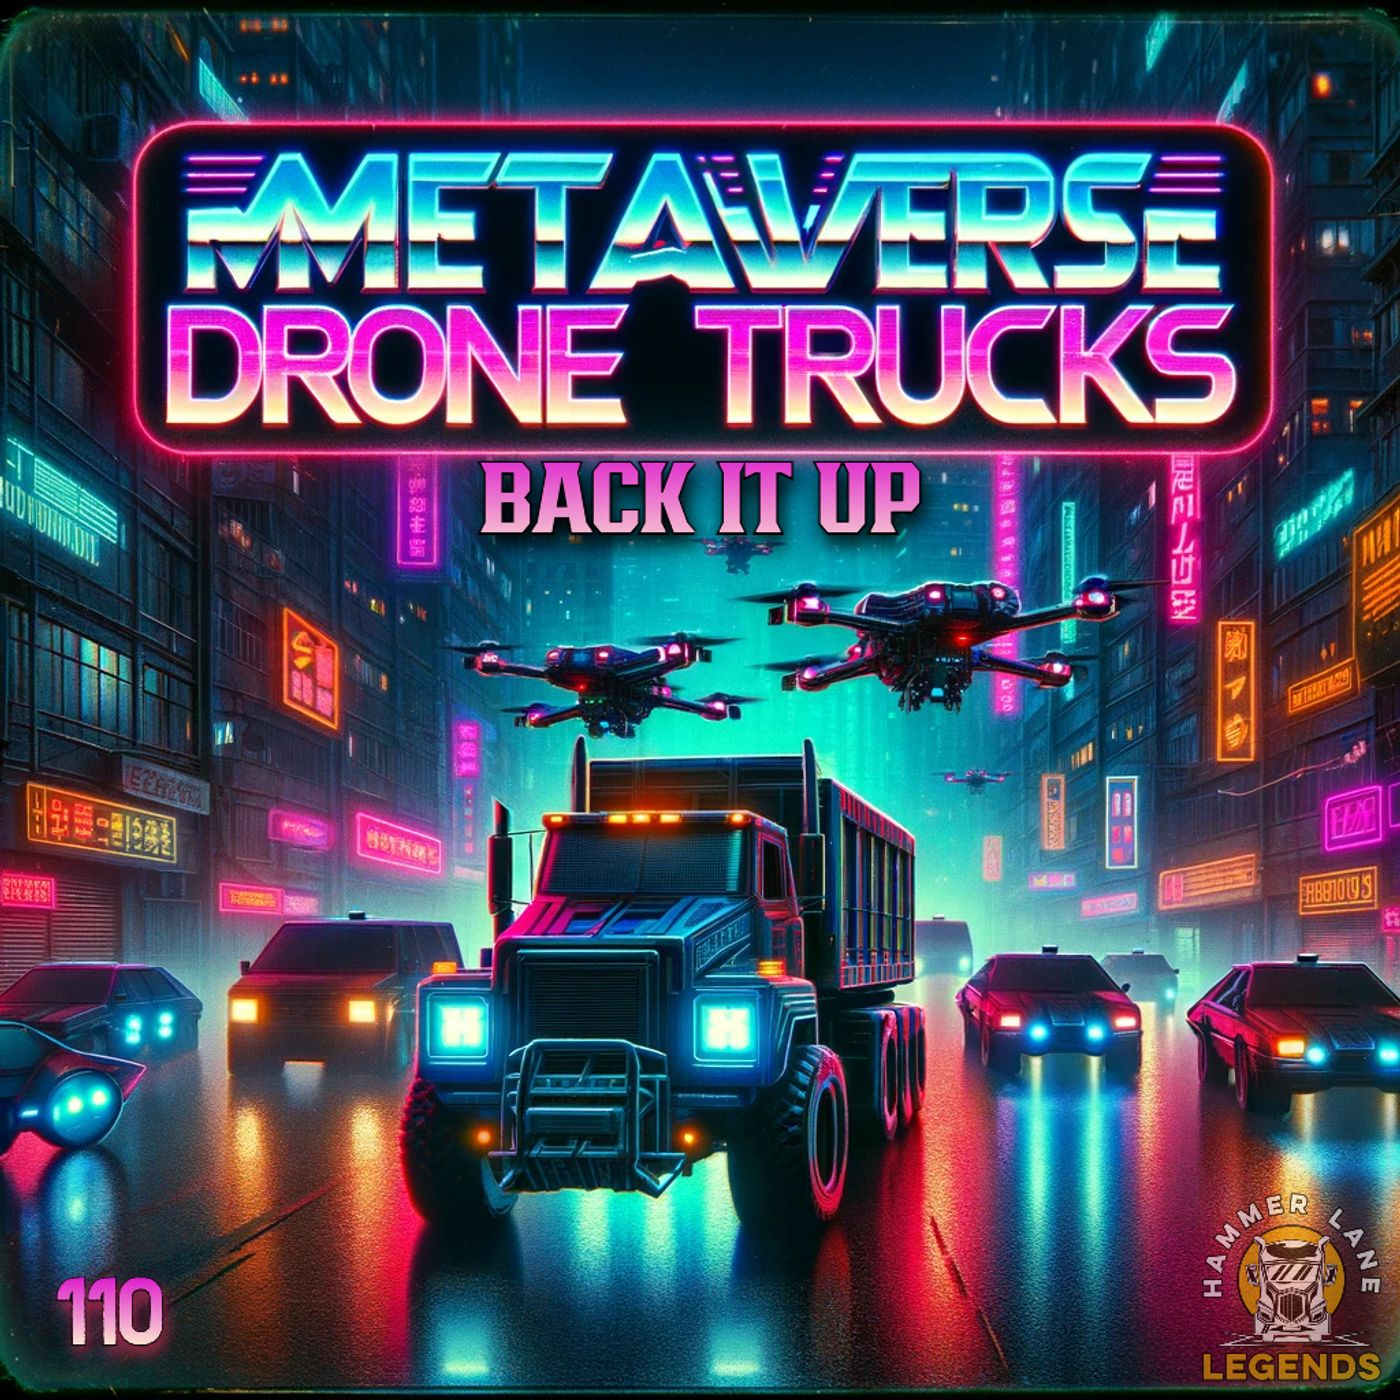 BACK IT UP | 110: Metaverse Drone Trucks